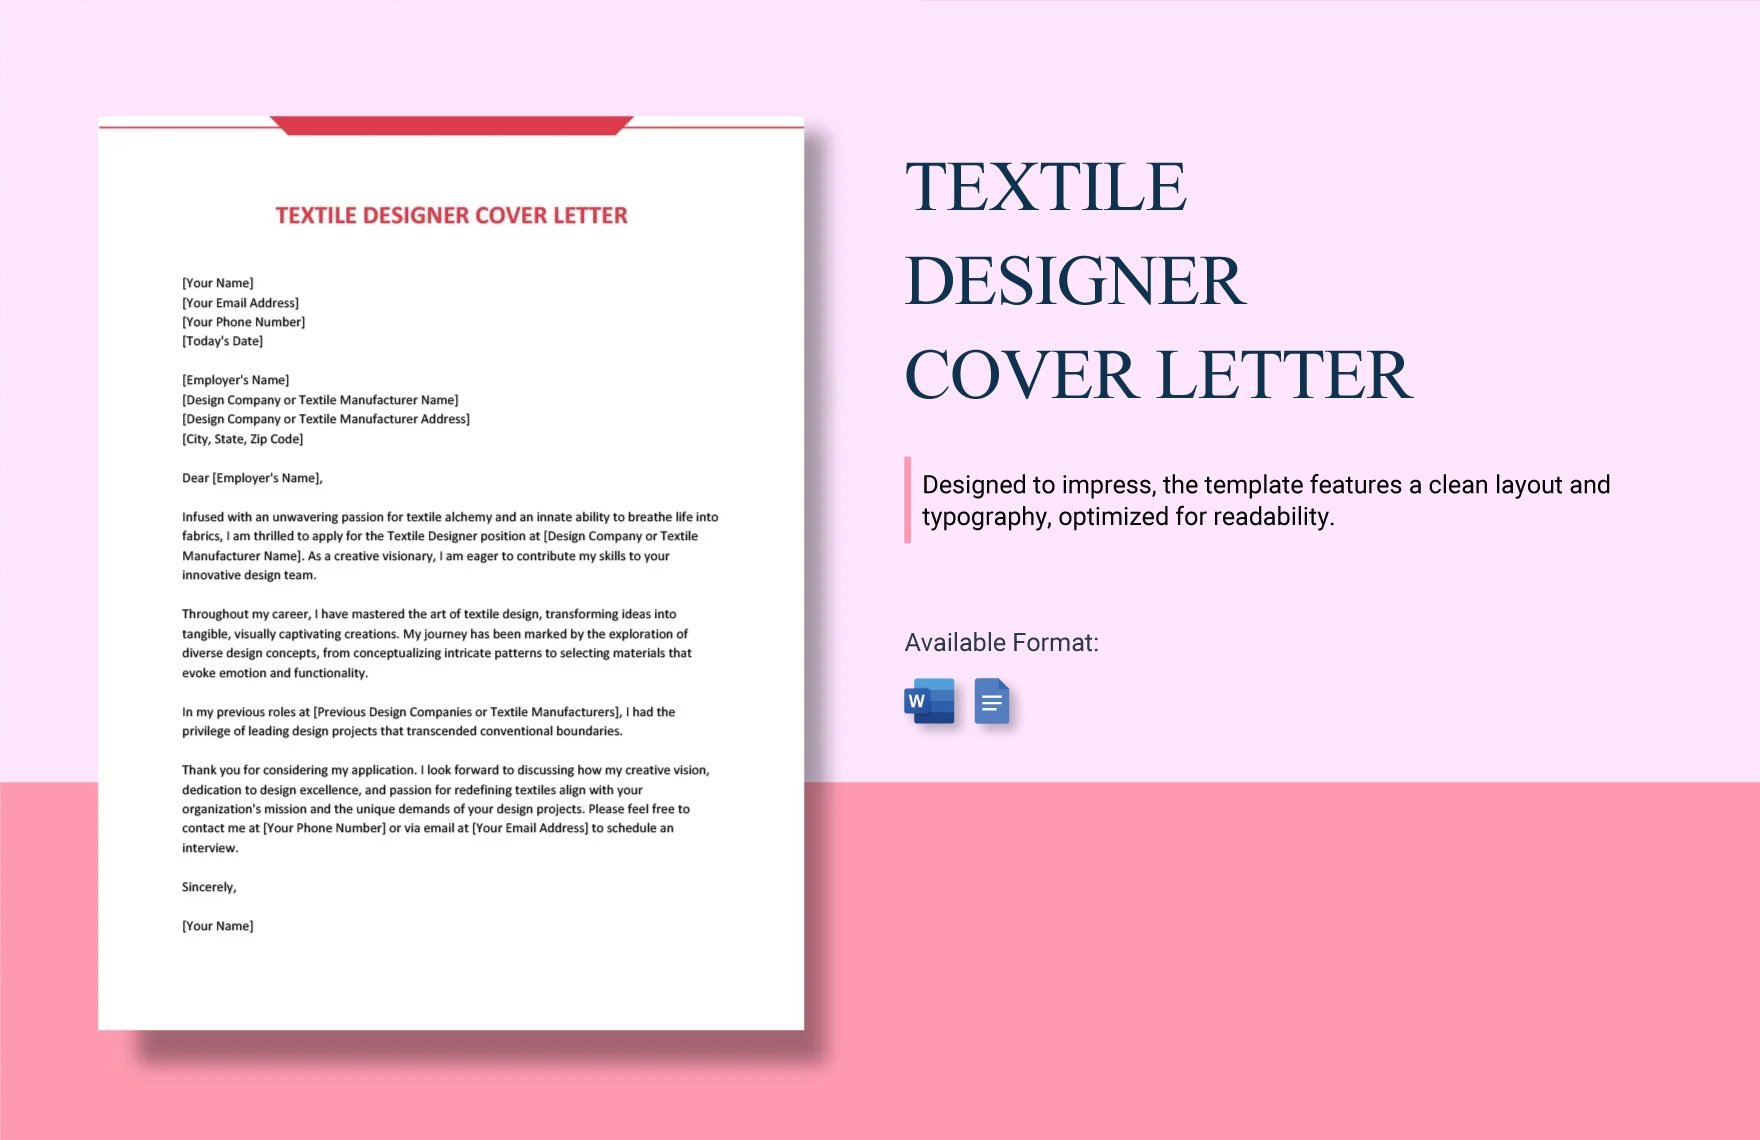 Free Textile Designer Cover Letter in Word, Google Docs